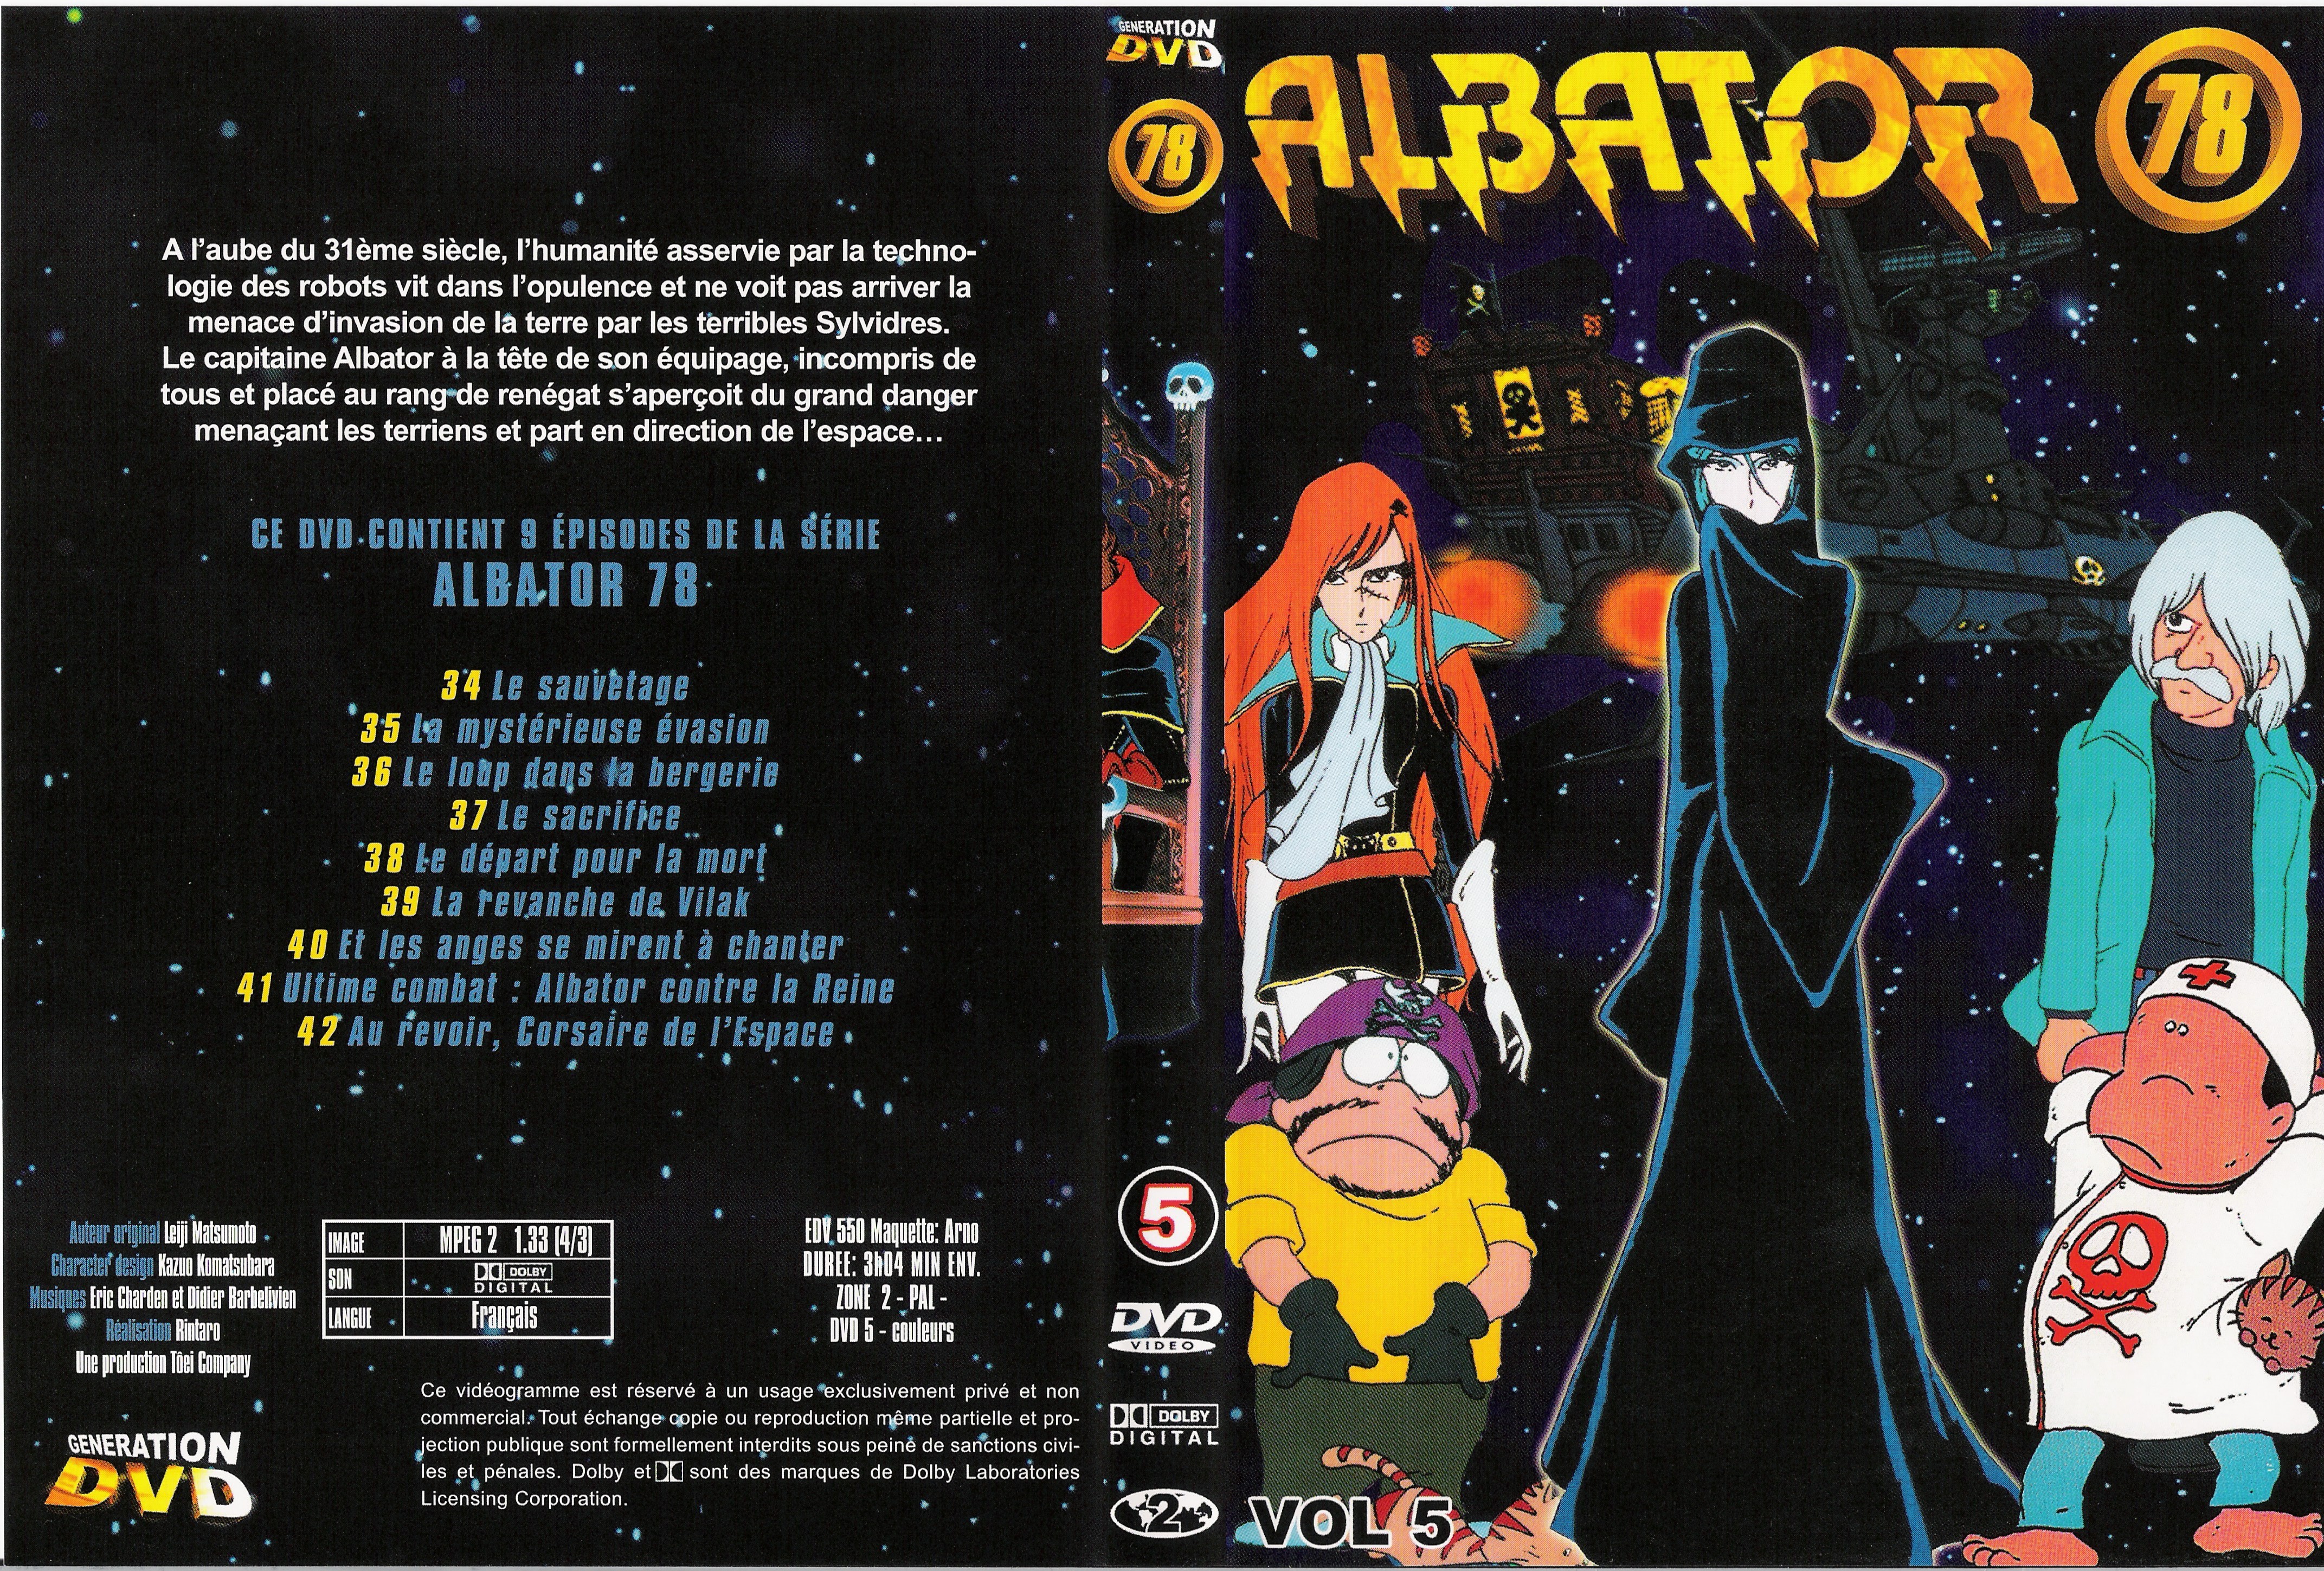 Jaquette DVD Albator 78 vol 5 (GENERATION DVD)